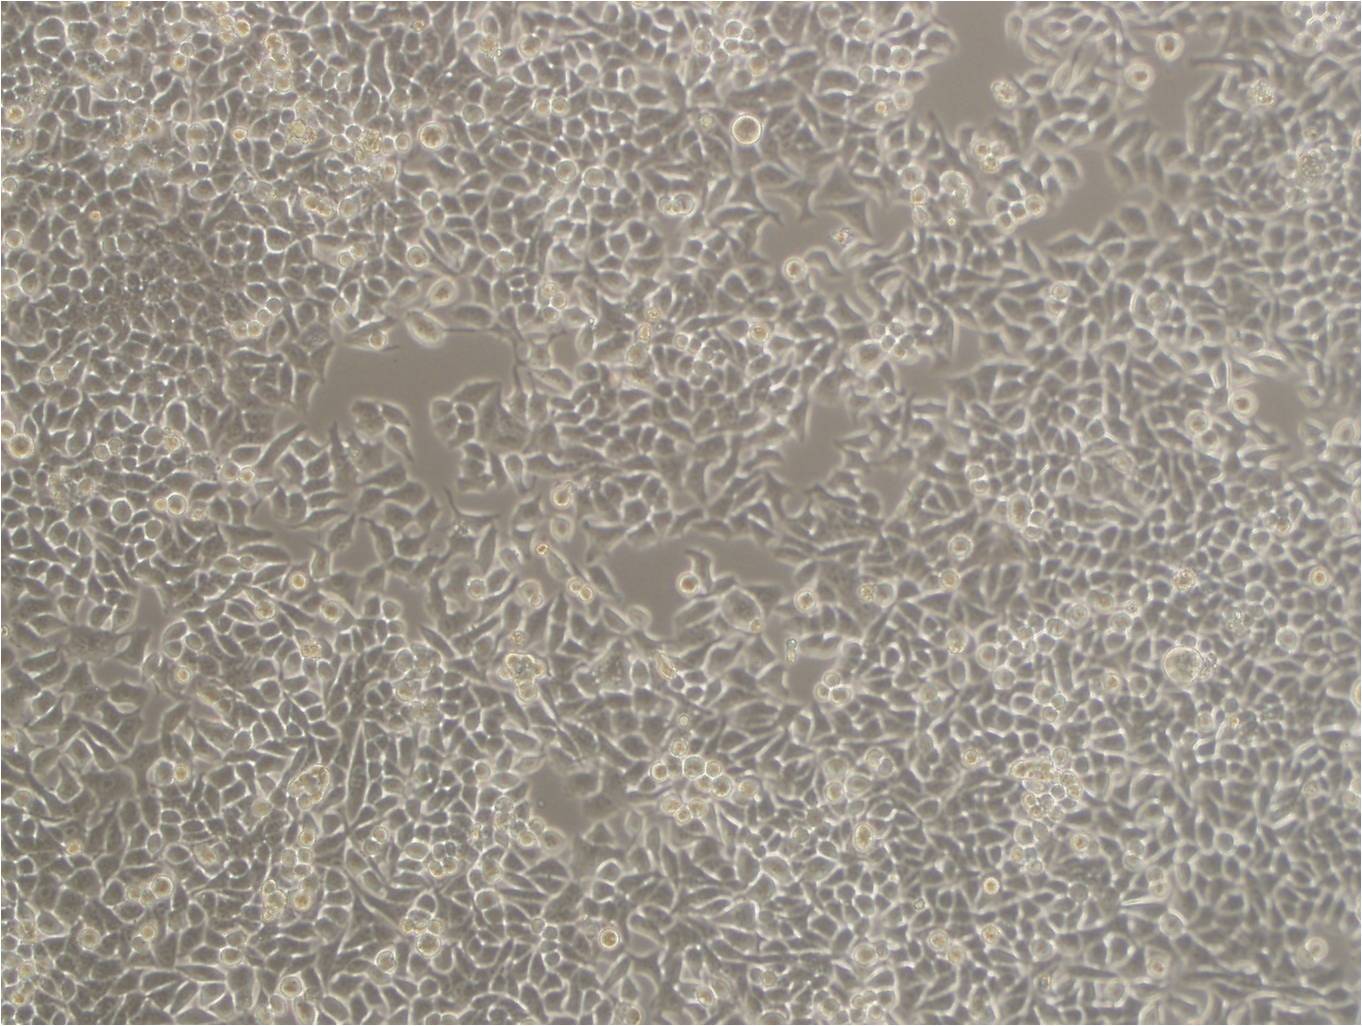 NPC-TW01 epithelioid cells人鼻咽癌细胞系,NPC-TW01 epithelioid cells